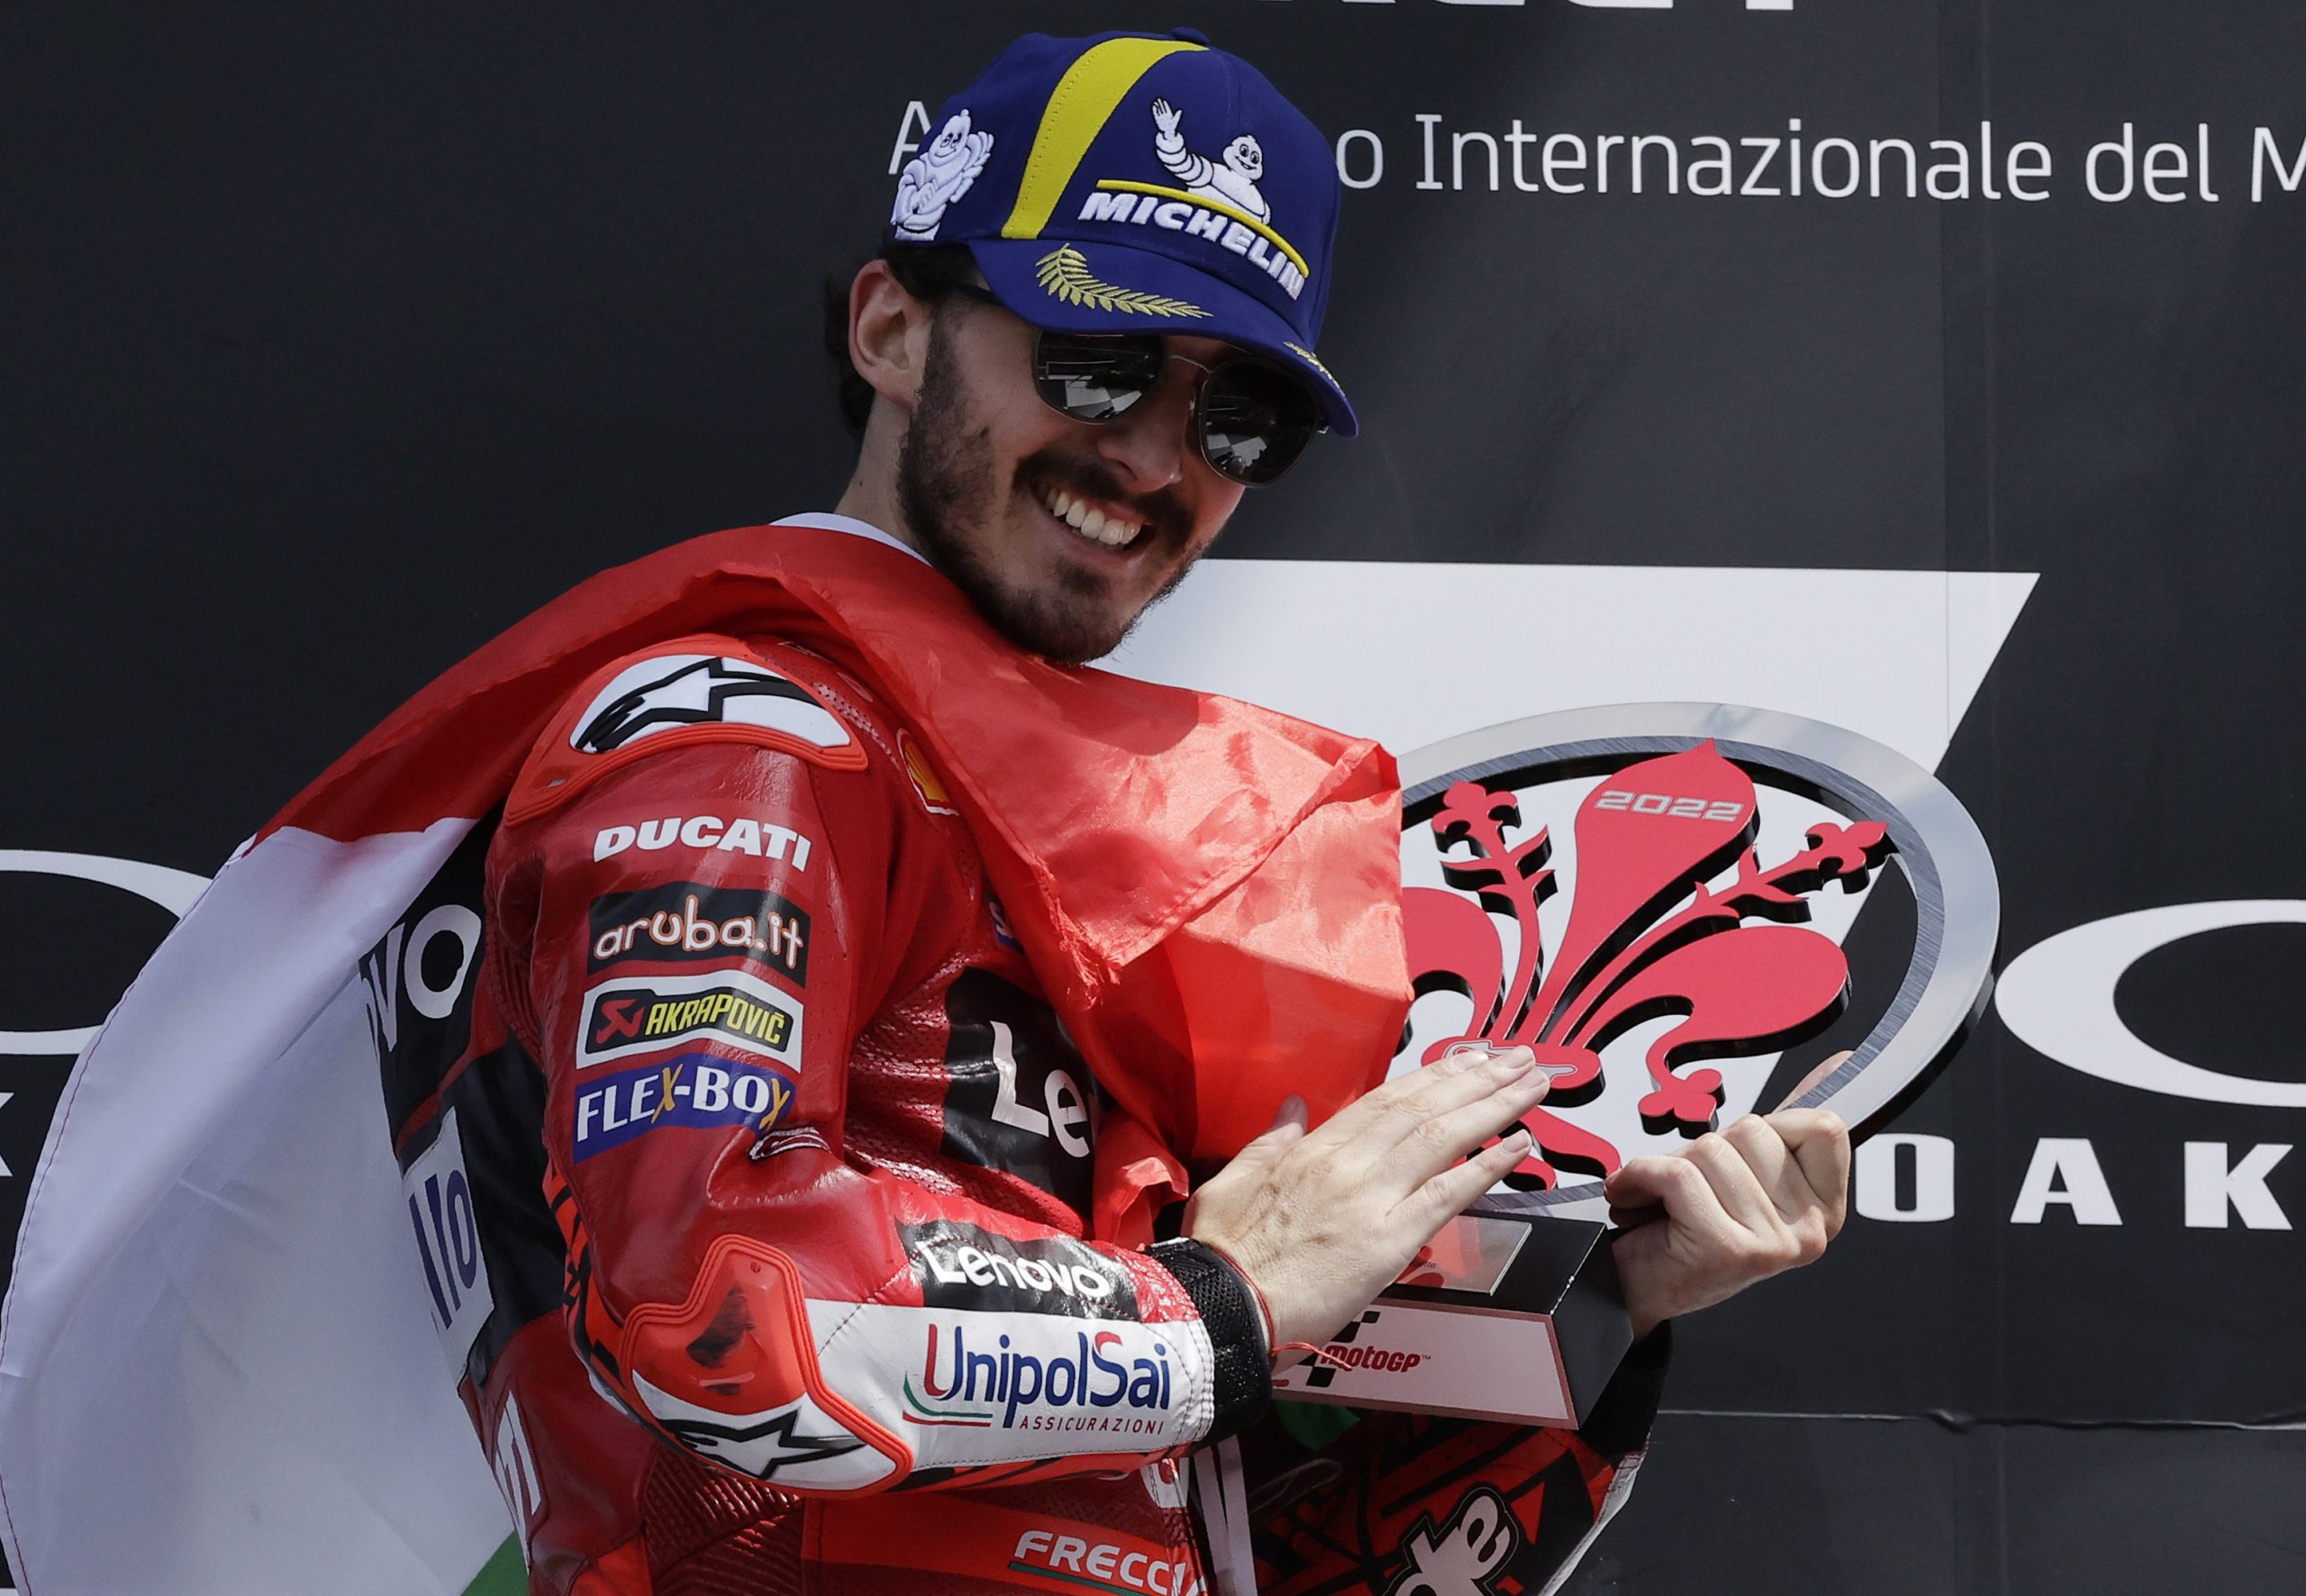 Bagnaia Leads Second Practice at MotoGP Italian GP, Rins Close Behind